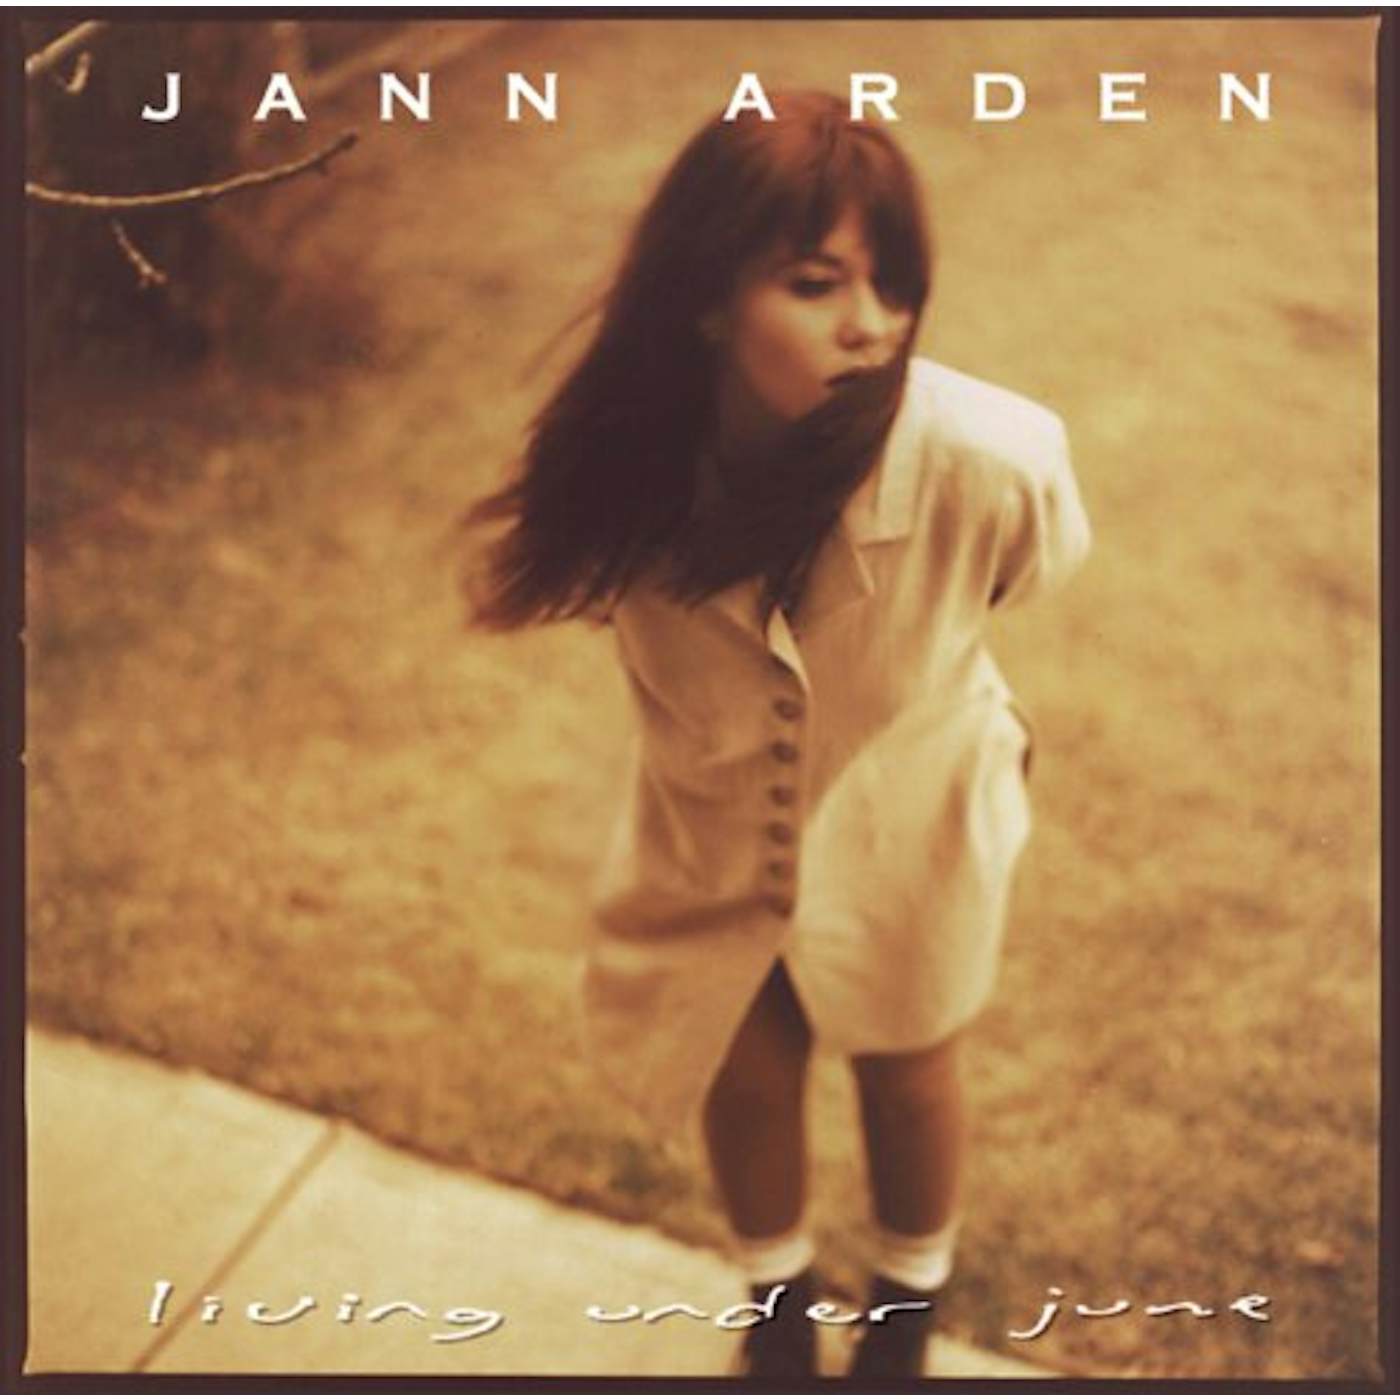 Jann Arden LIVING UNDER JUNE CD